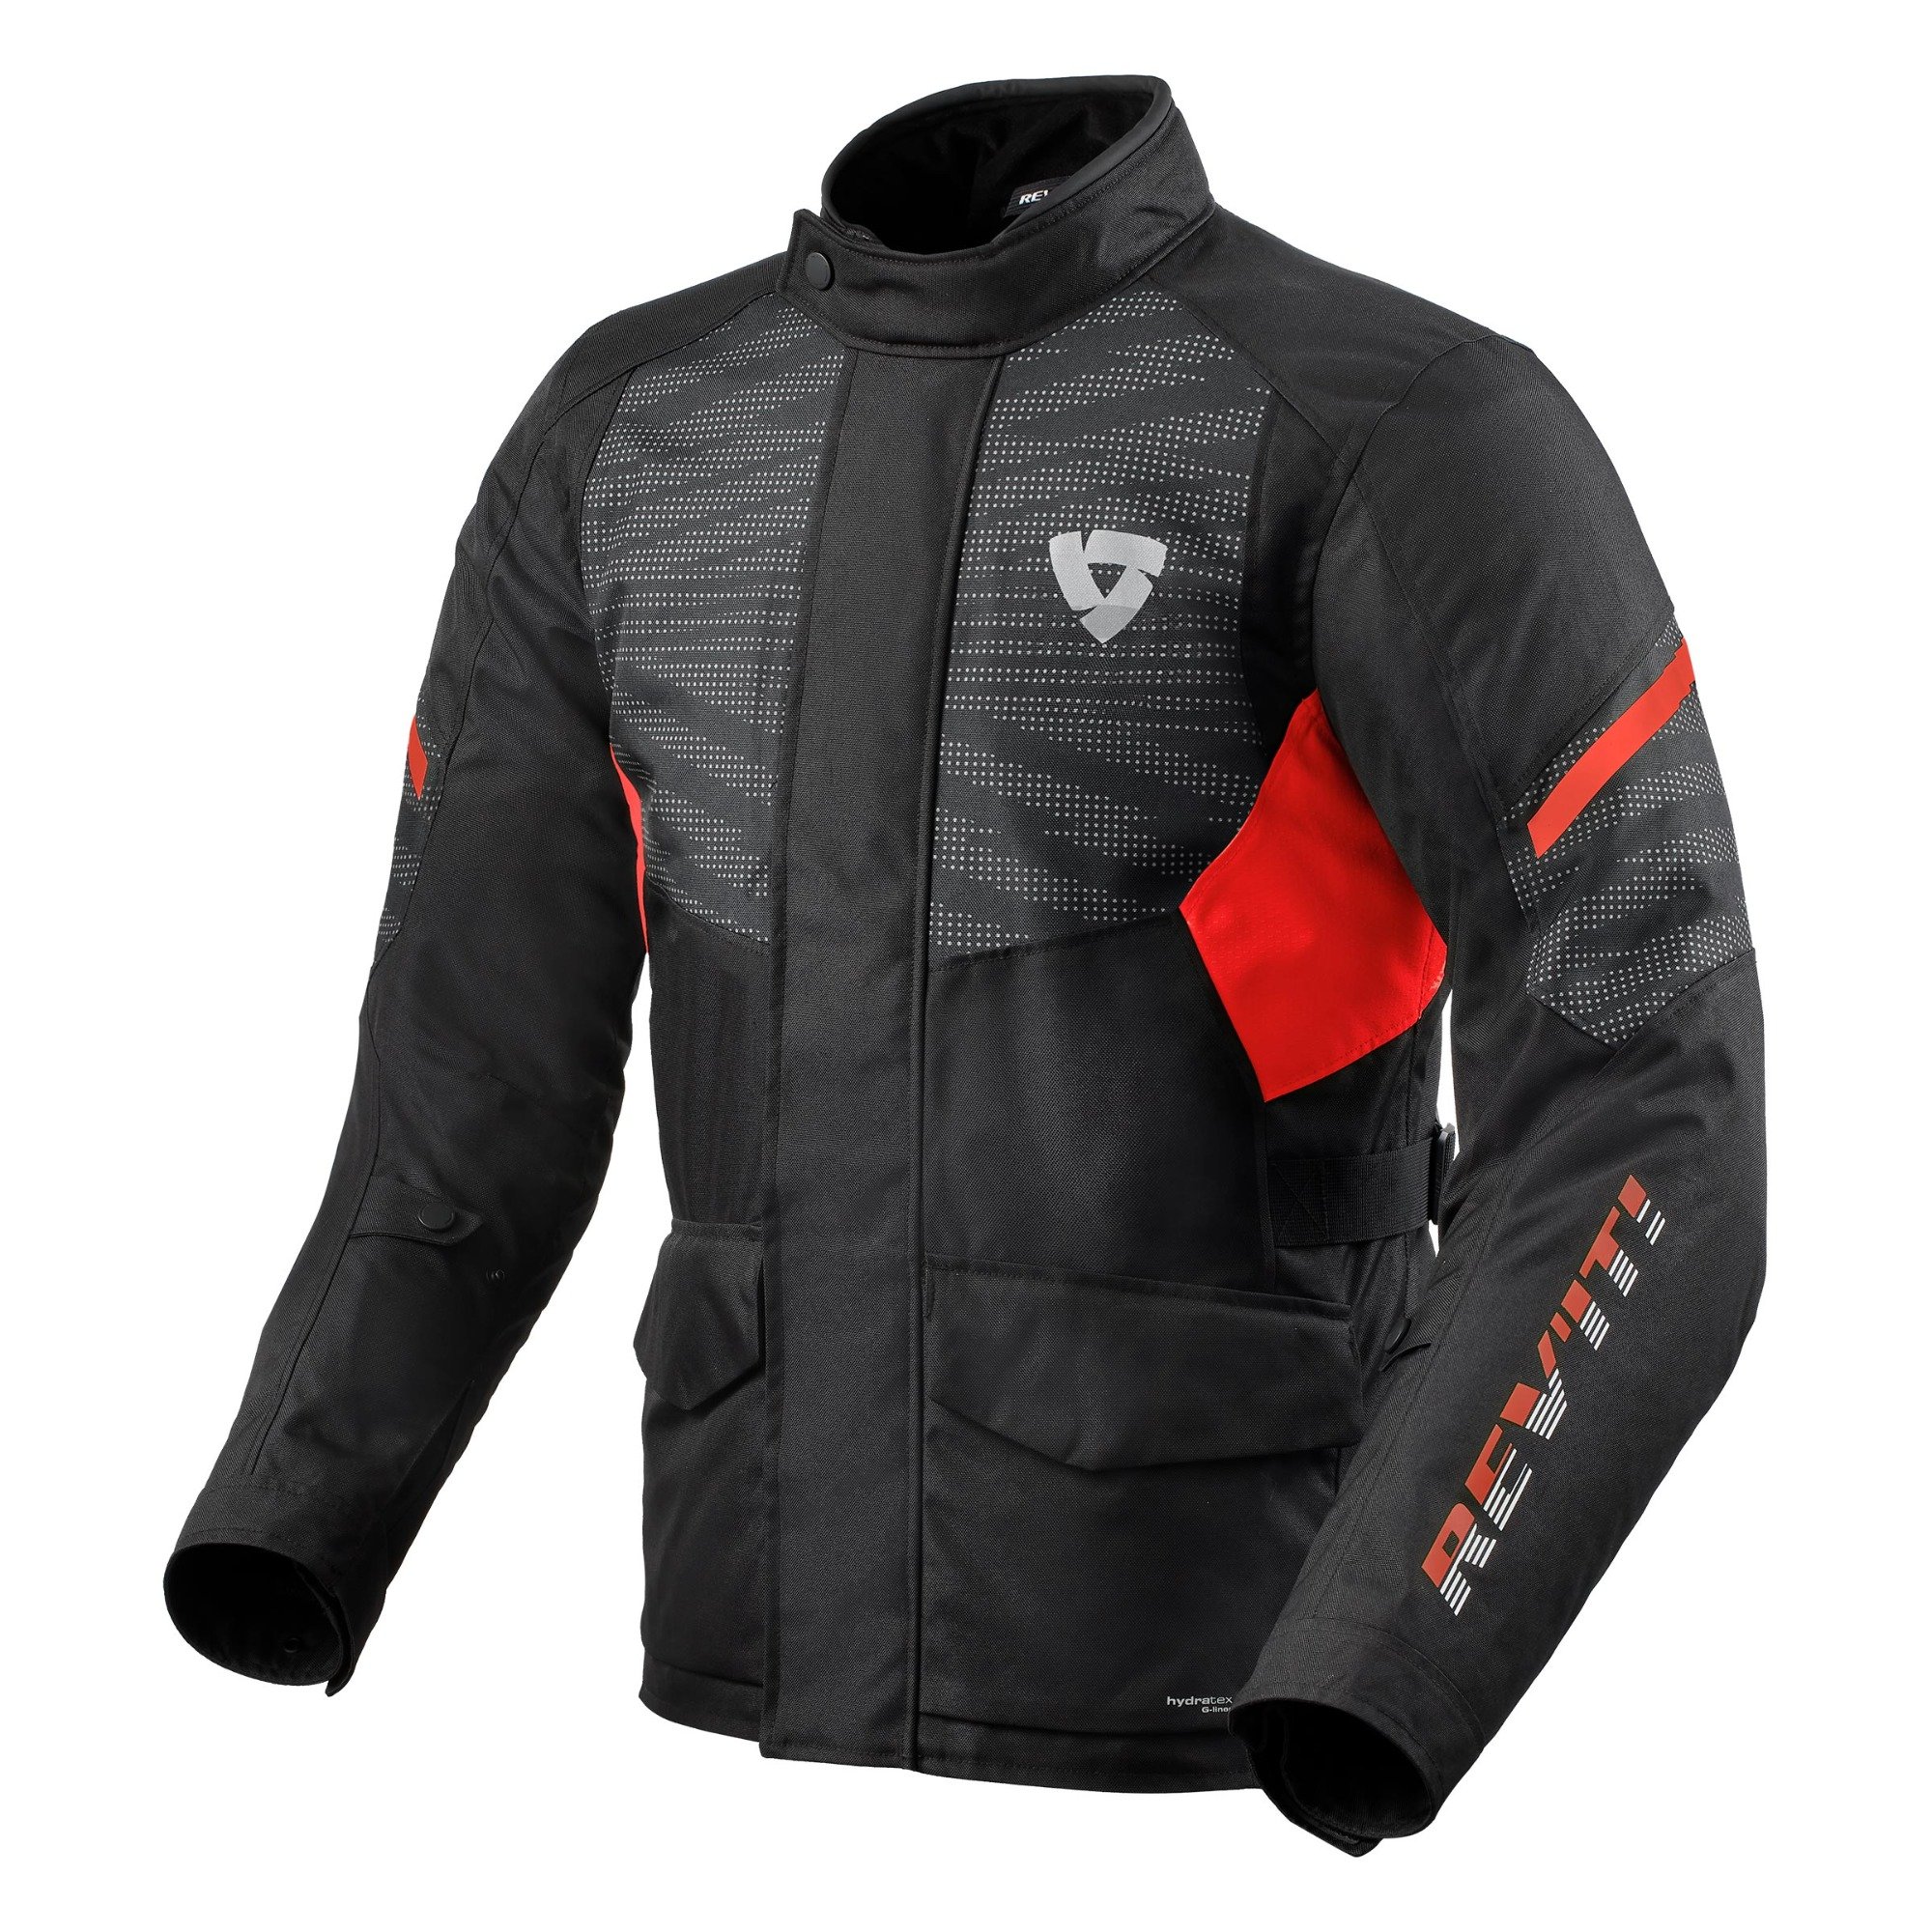 Image of REV'IT! Duke H2O Jacket Black Red Size XL ID 8700001332057